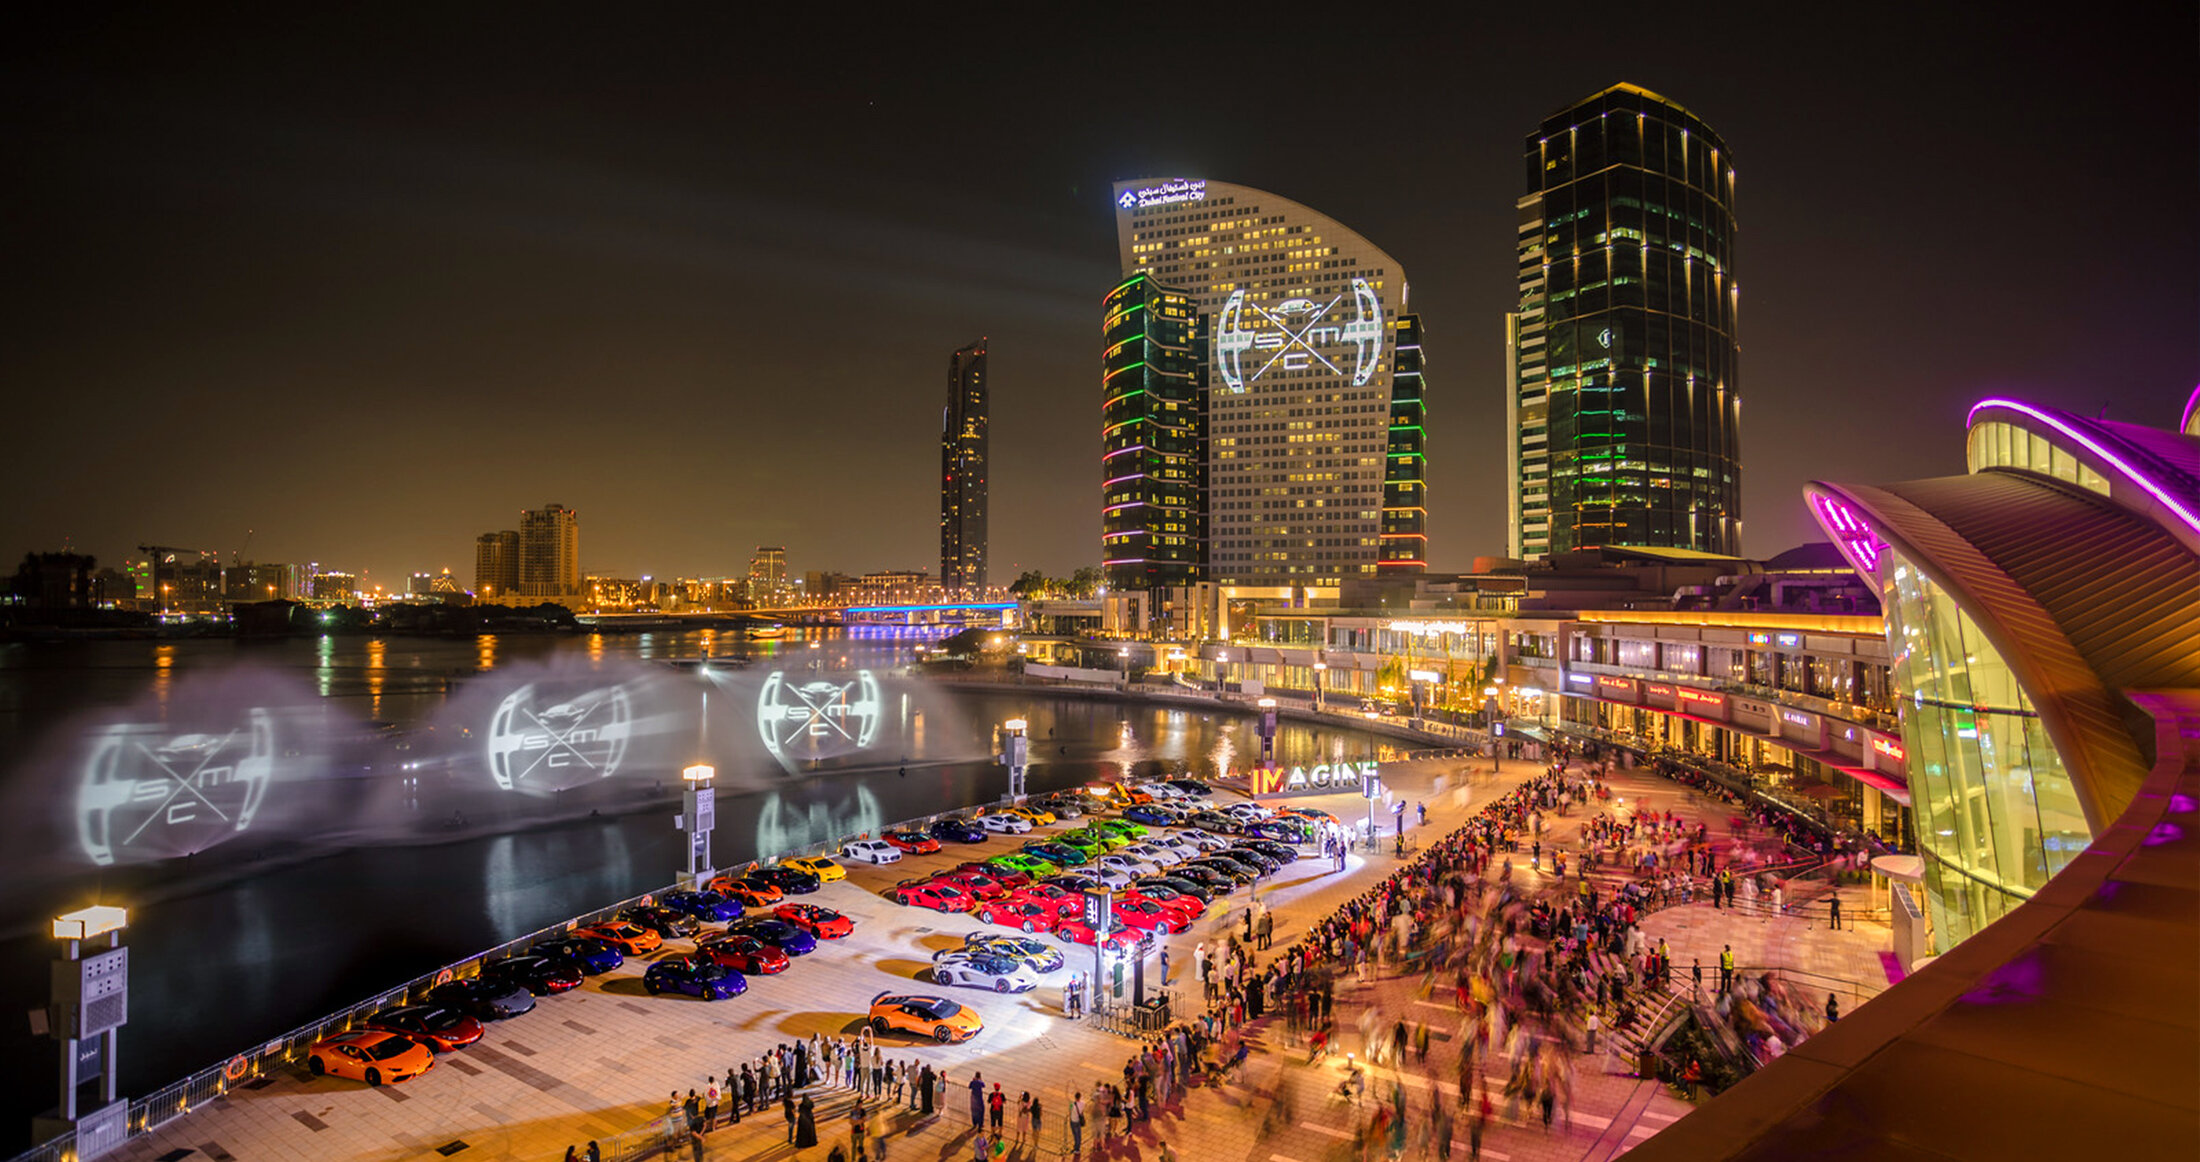 Intercontinental Dubai Festival City